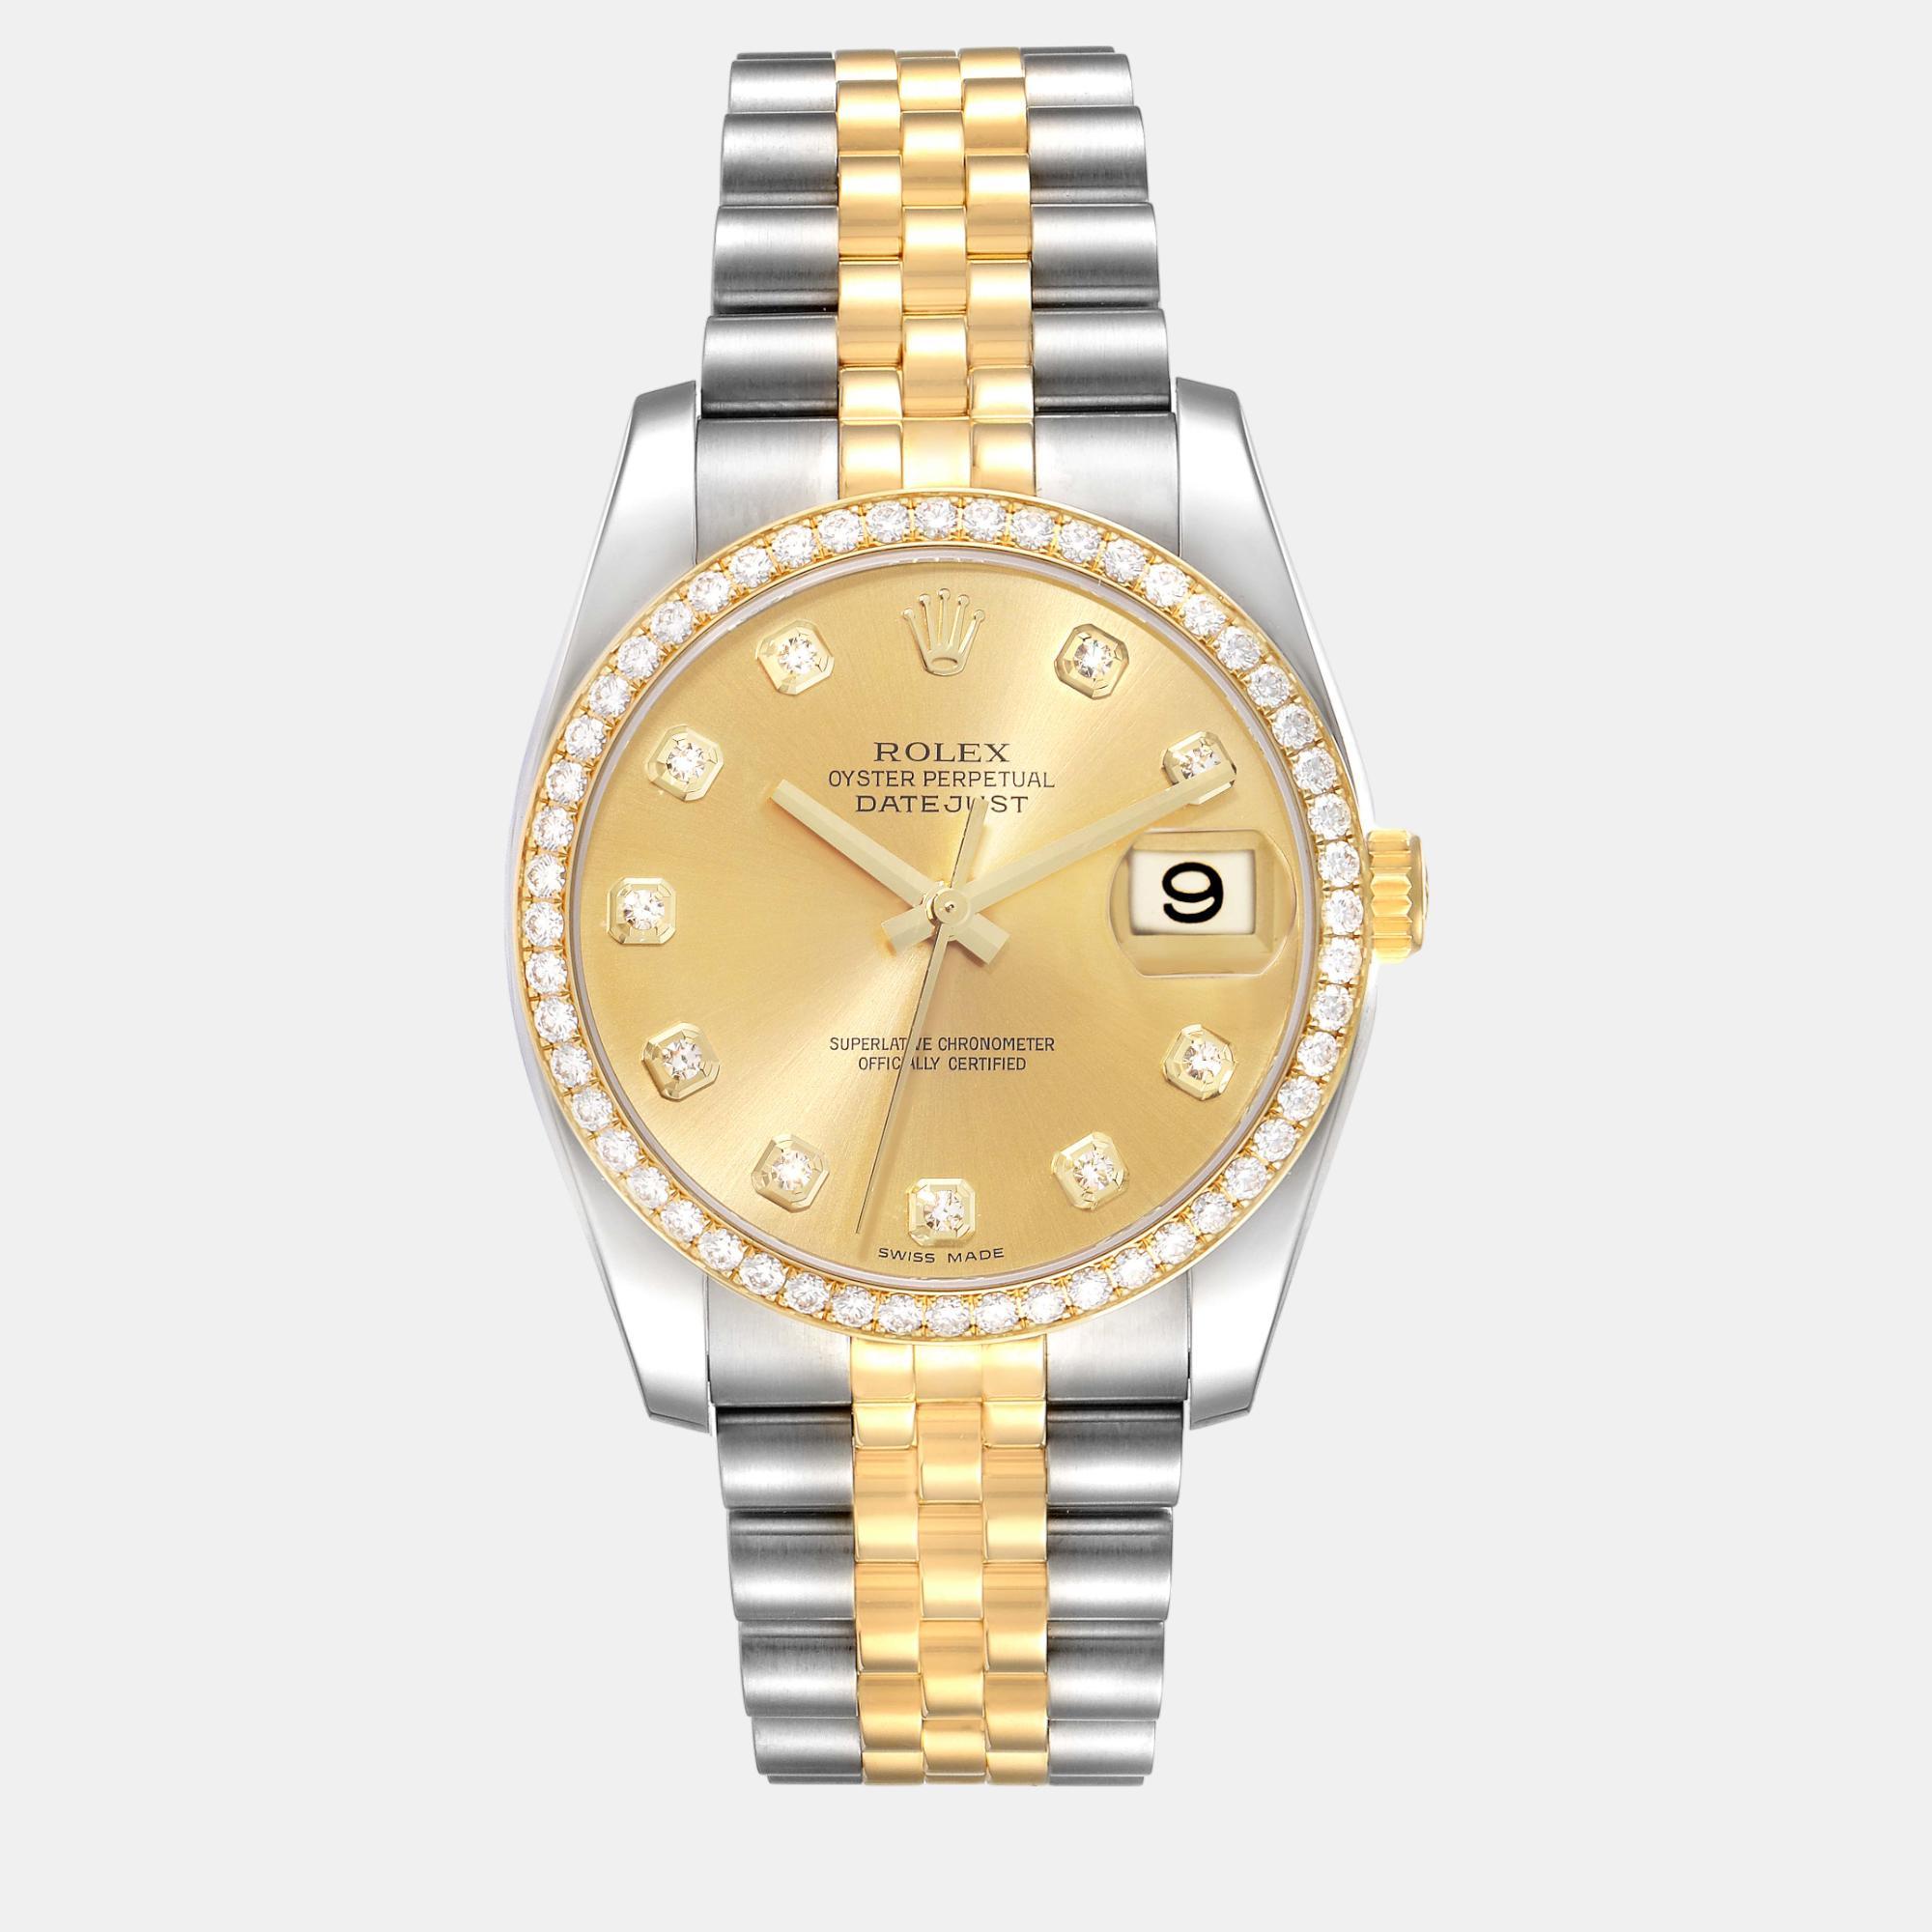 Rolex datejust champagne dial steel yellow gold diamond men's watch 36.0 mm